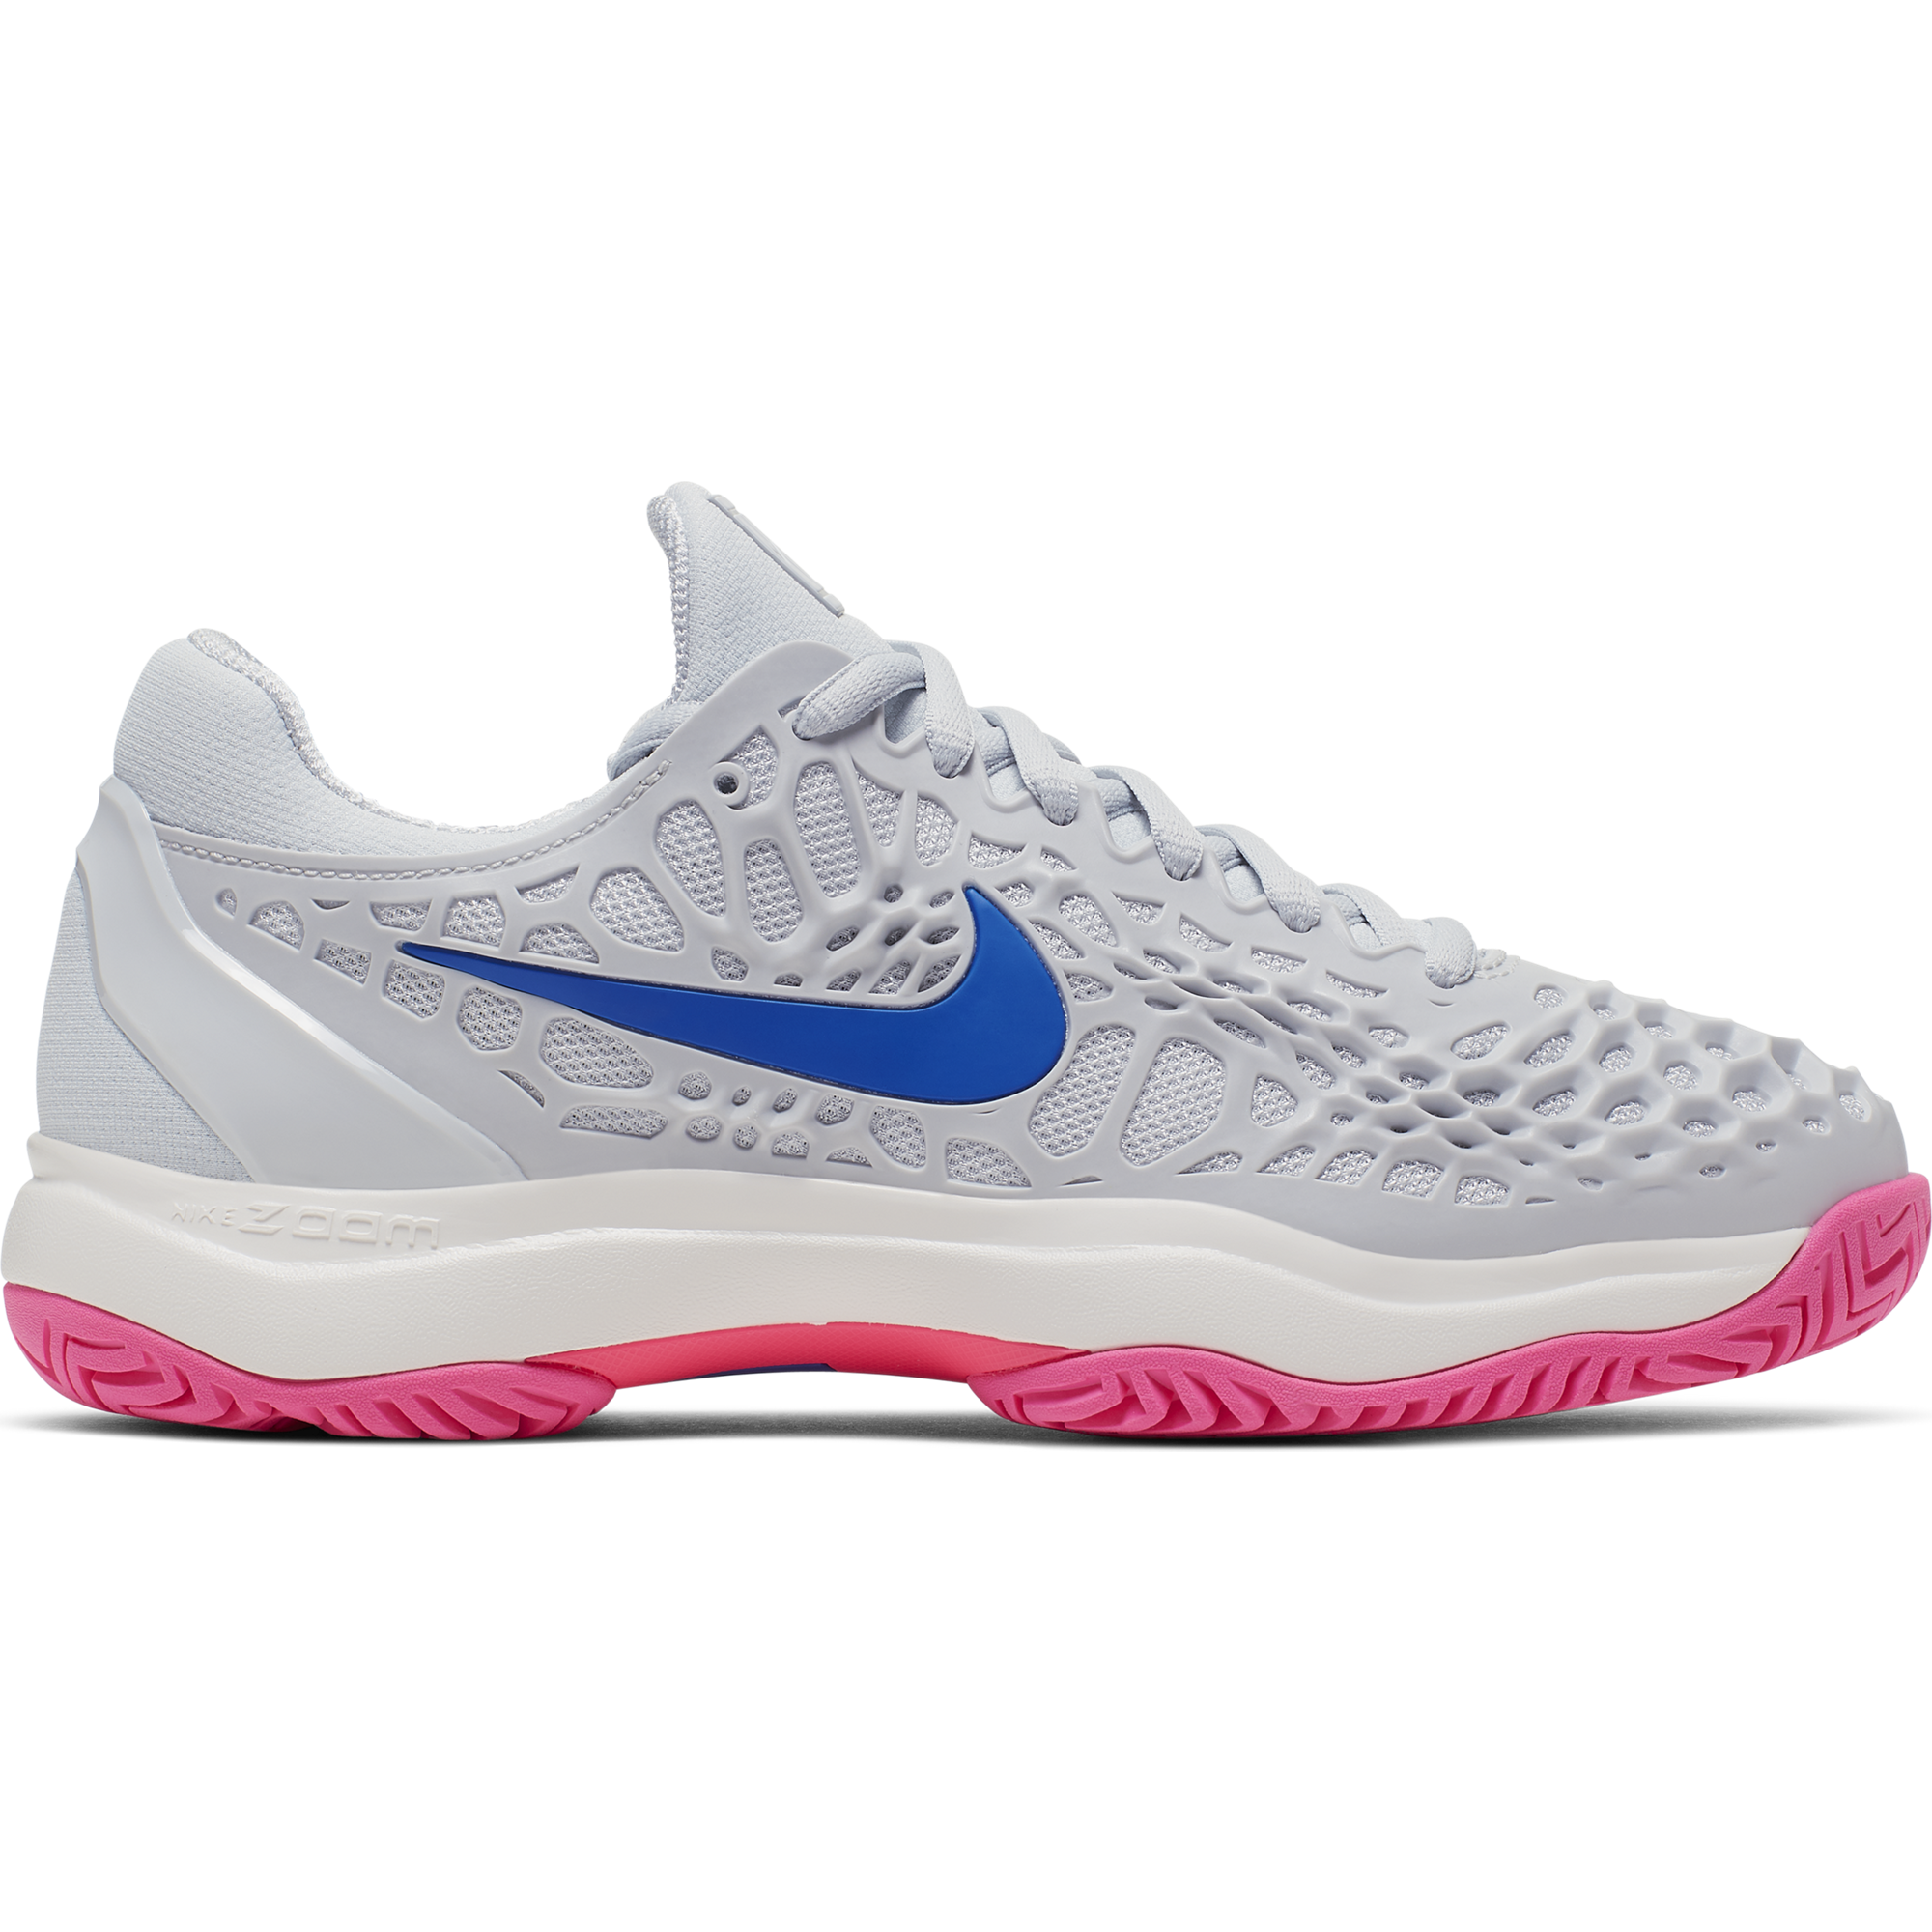 Nike Zoom Cage 3 Women's Tennis Shoe 